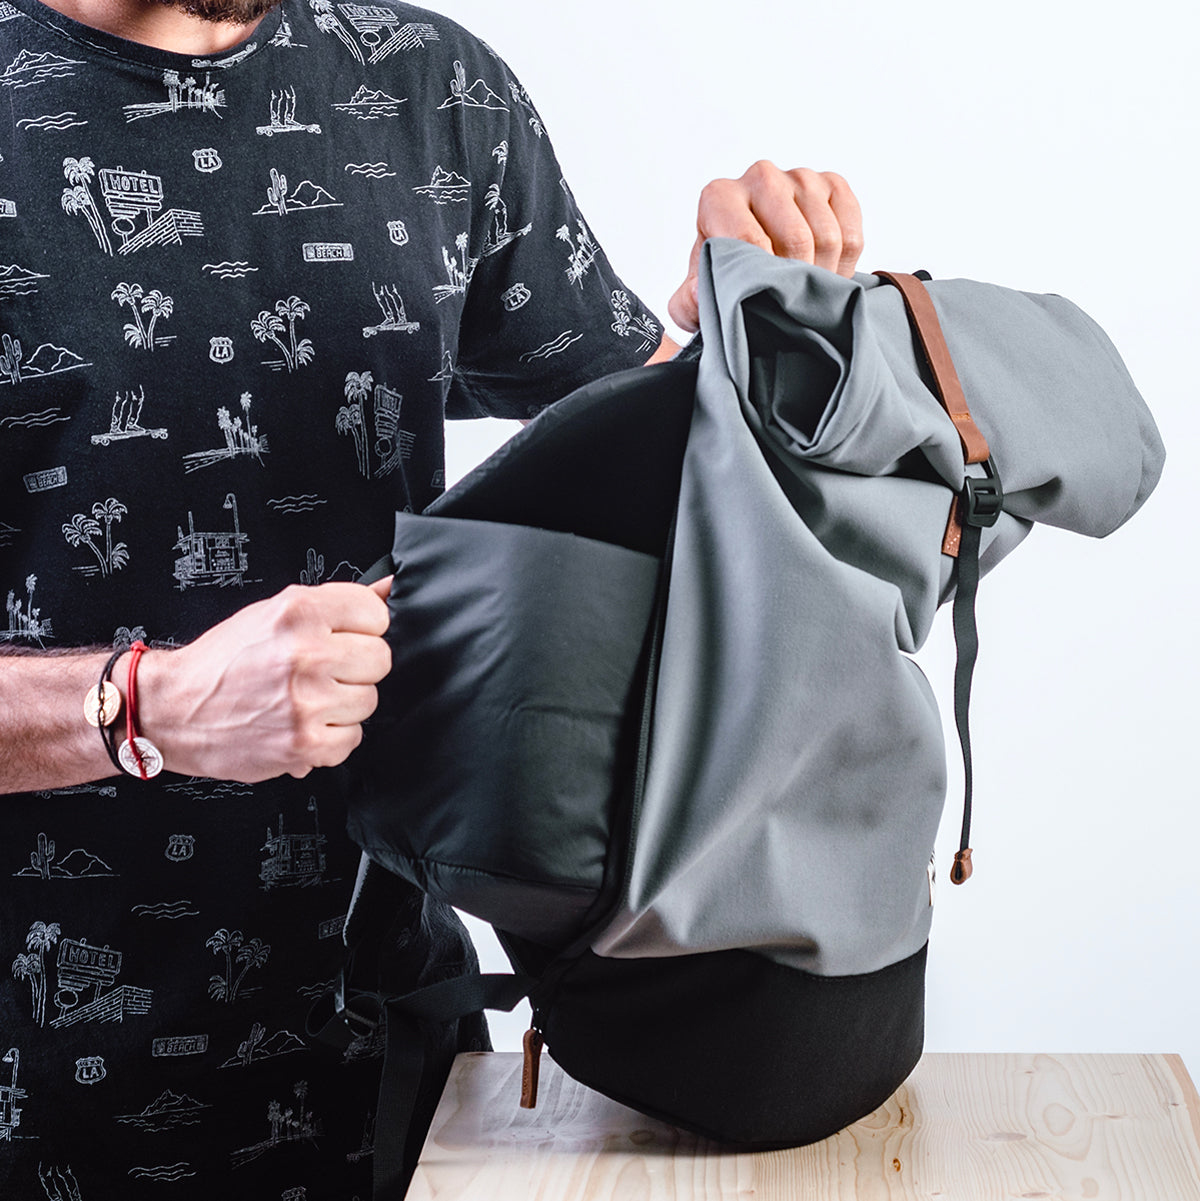 Roll-top backpack Squamish Mero Mero